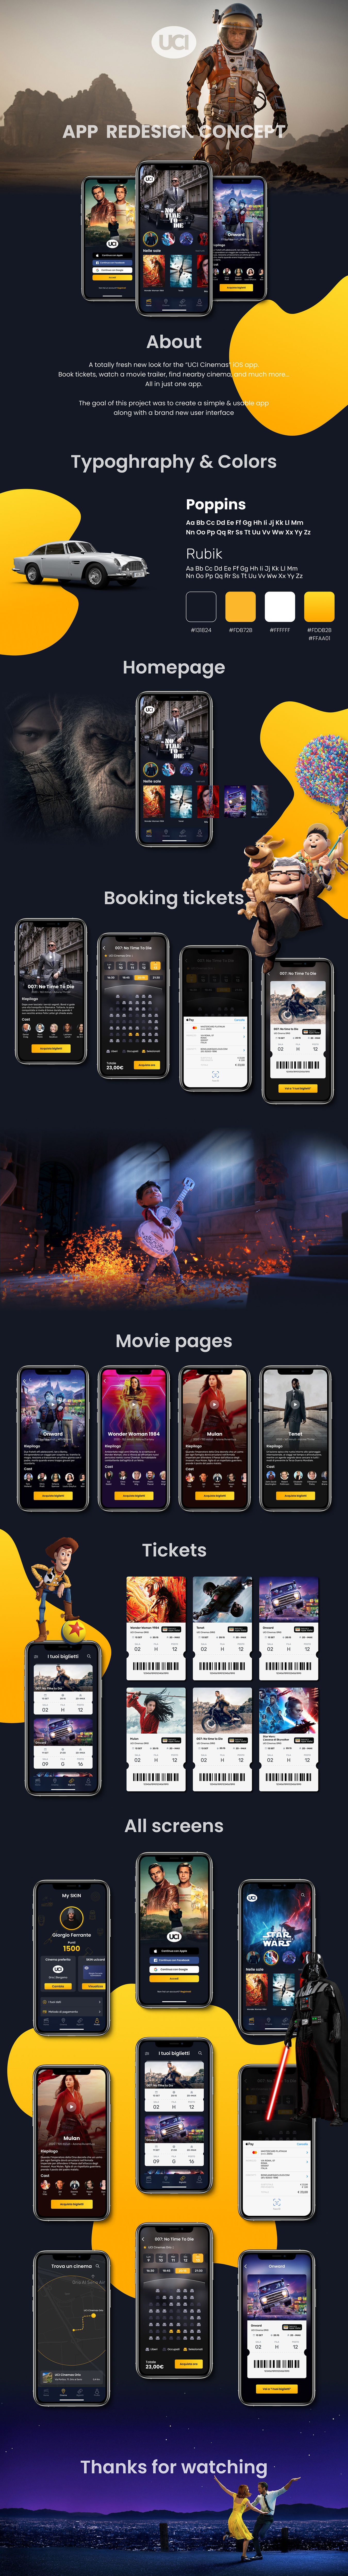 Booking Cinema Film   movie theater app movie ticket app